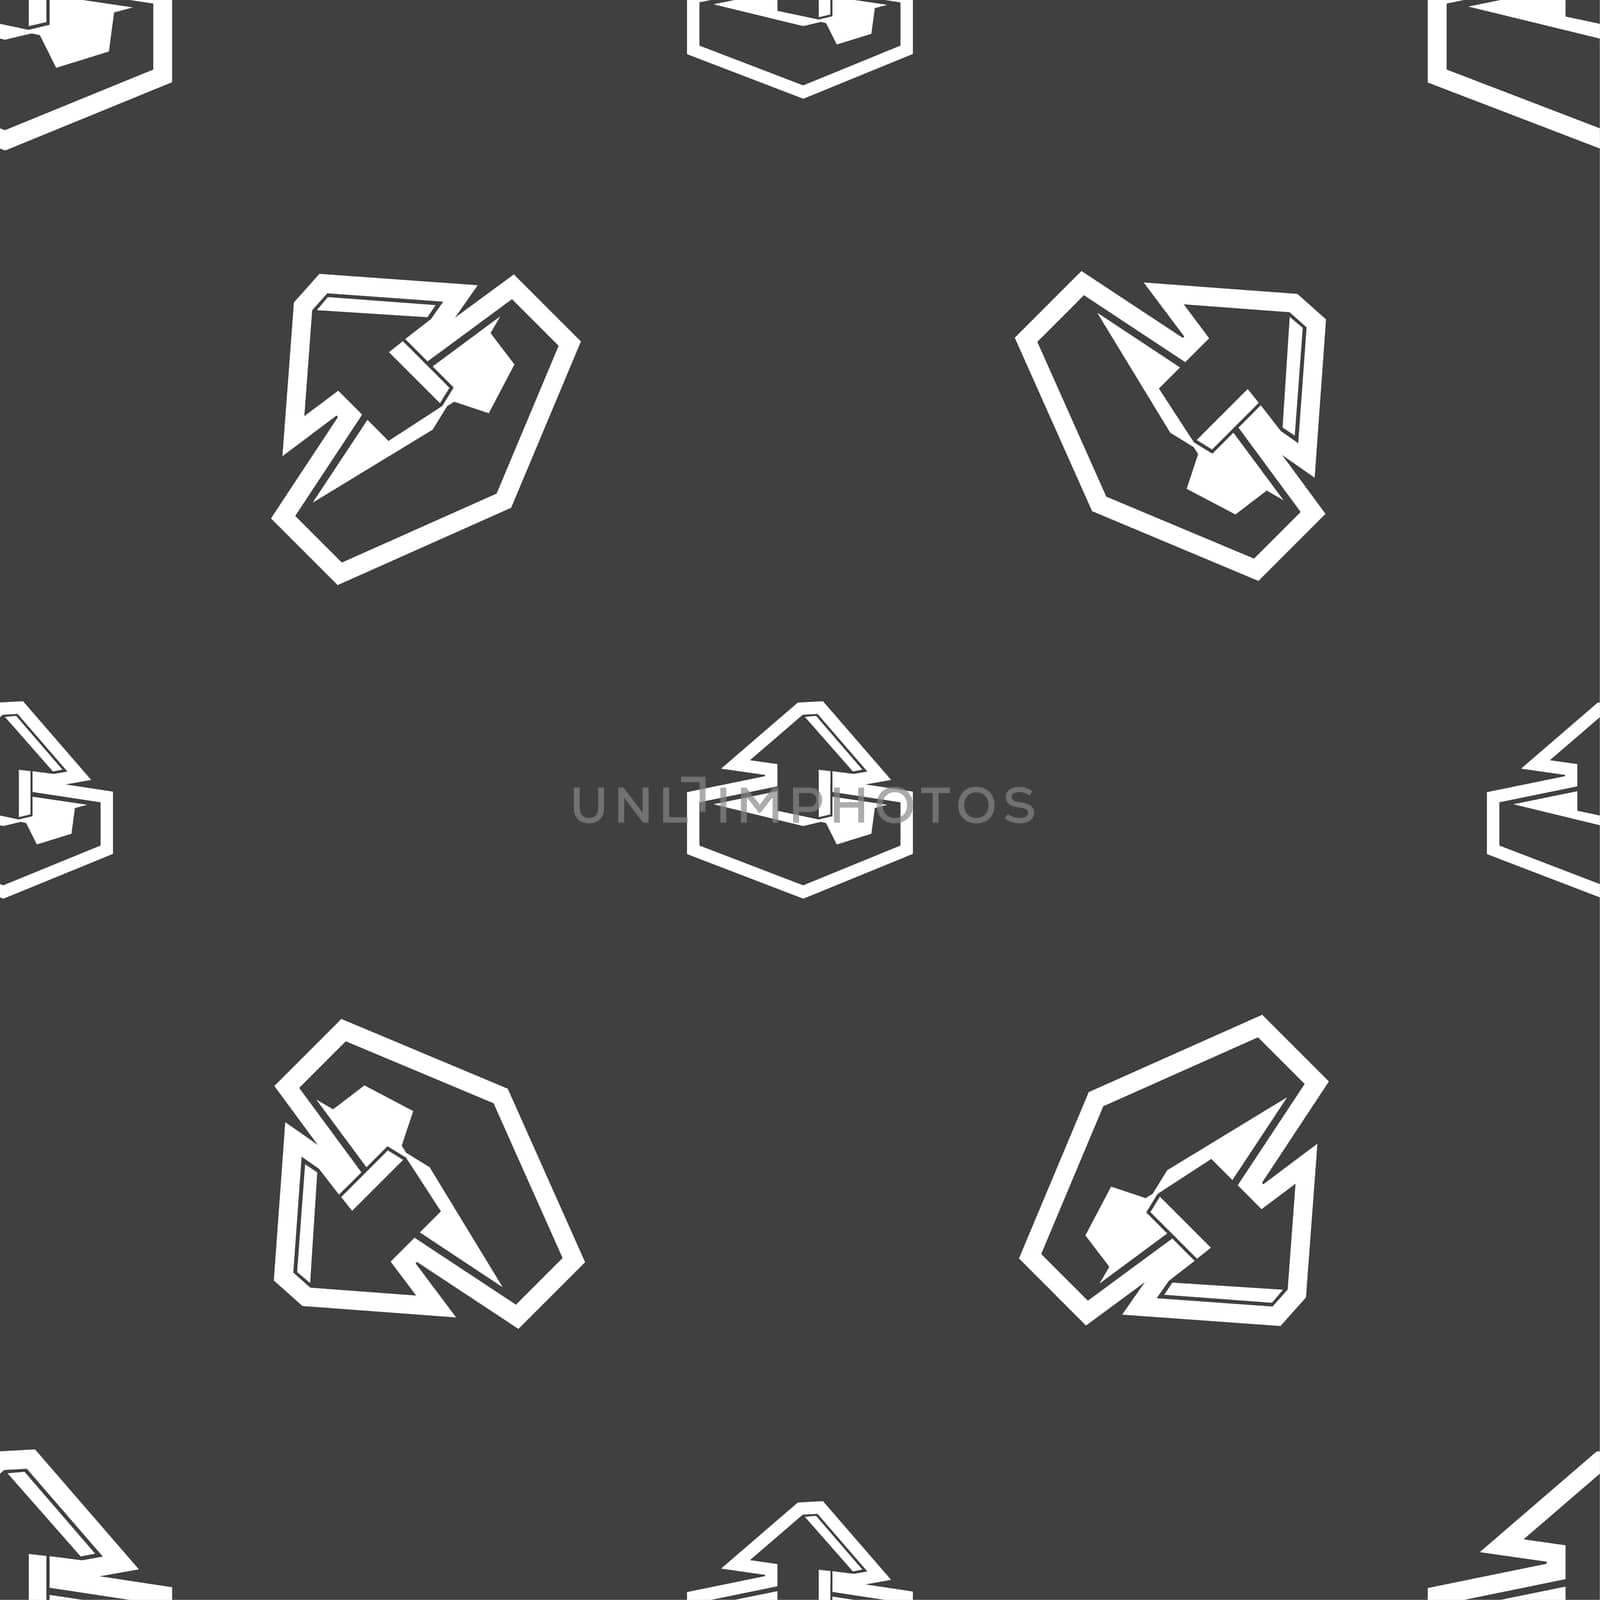 Upload icon sign. Seamless pattern on a gray background.  by serhii_lohvyniuk